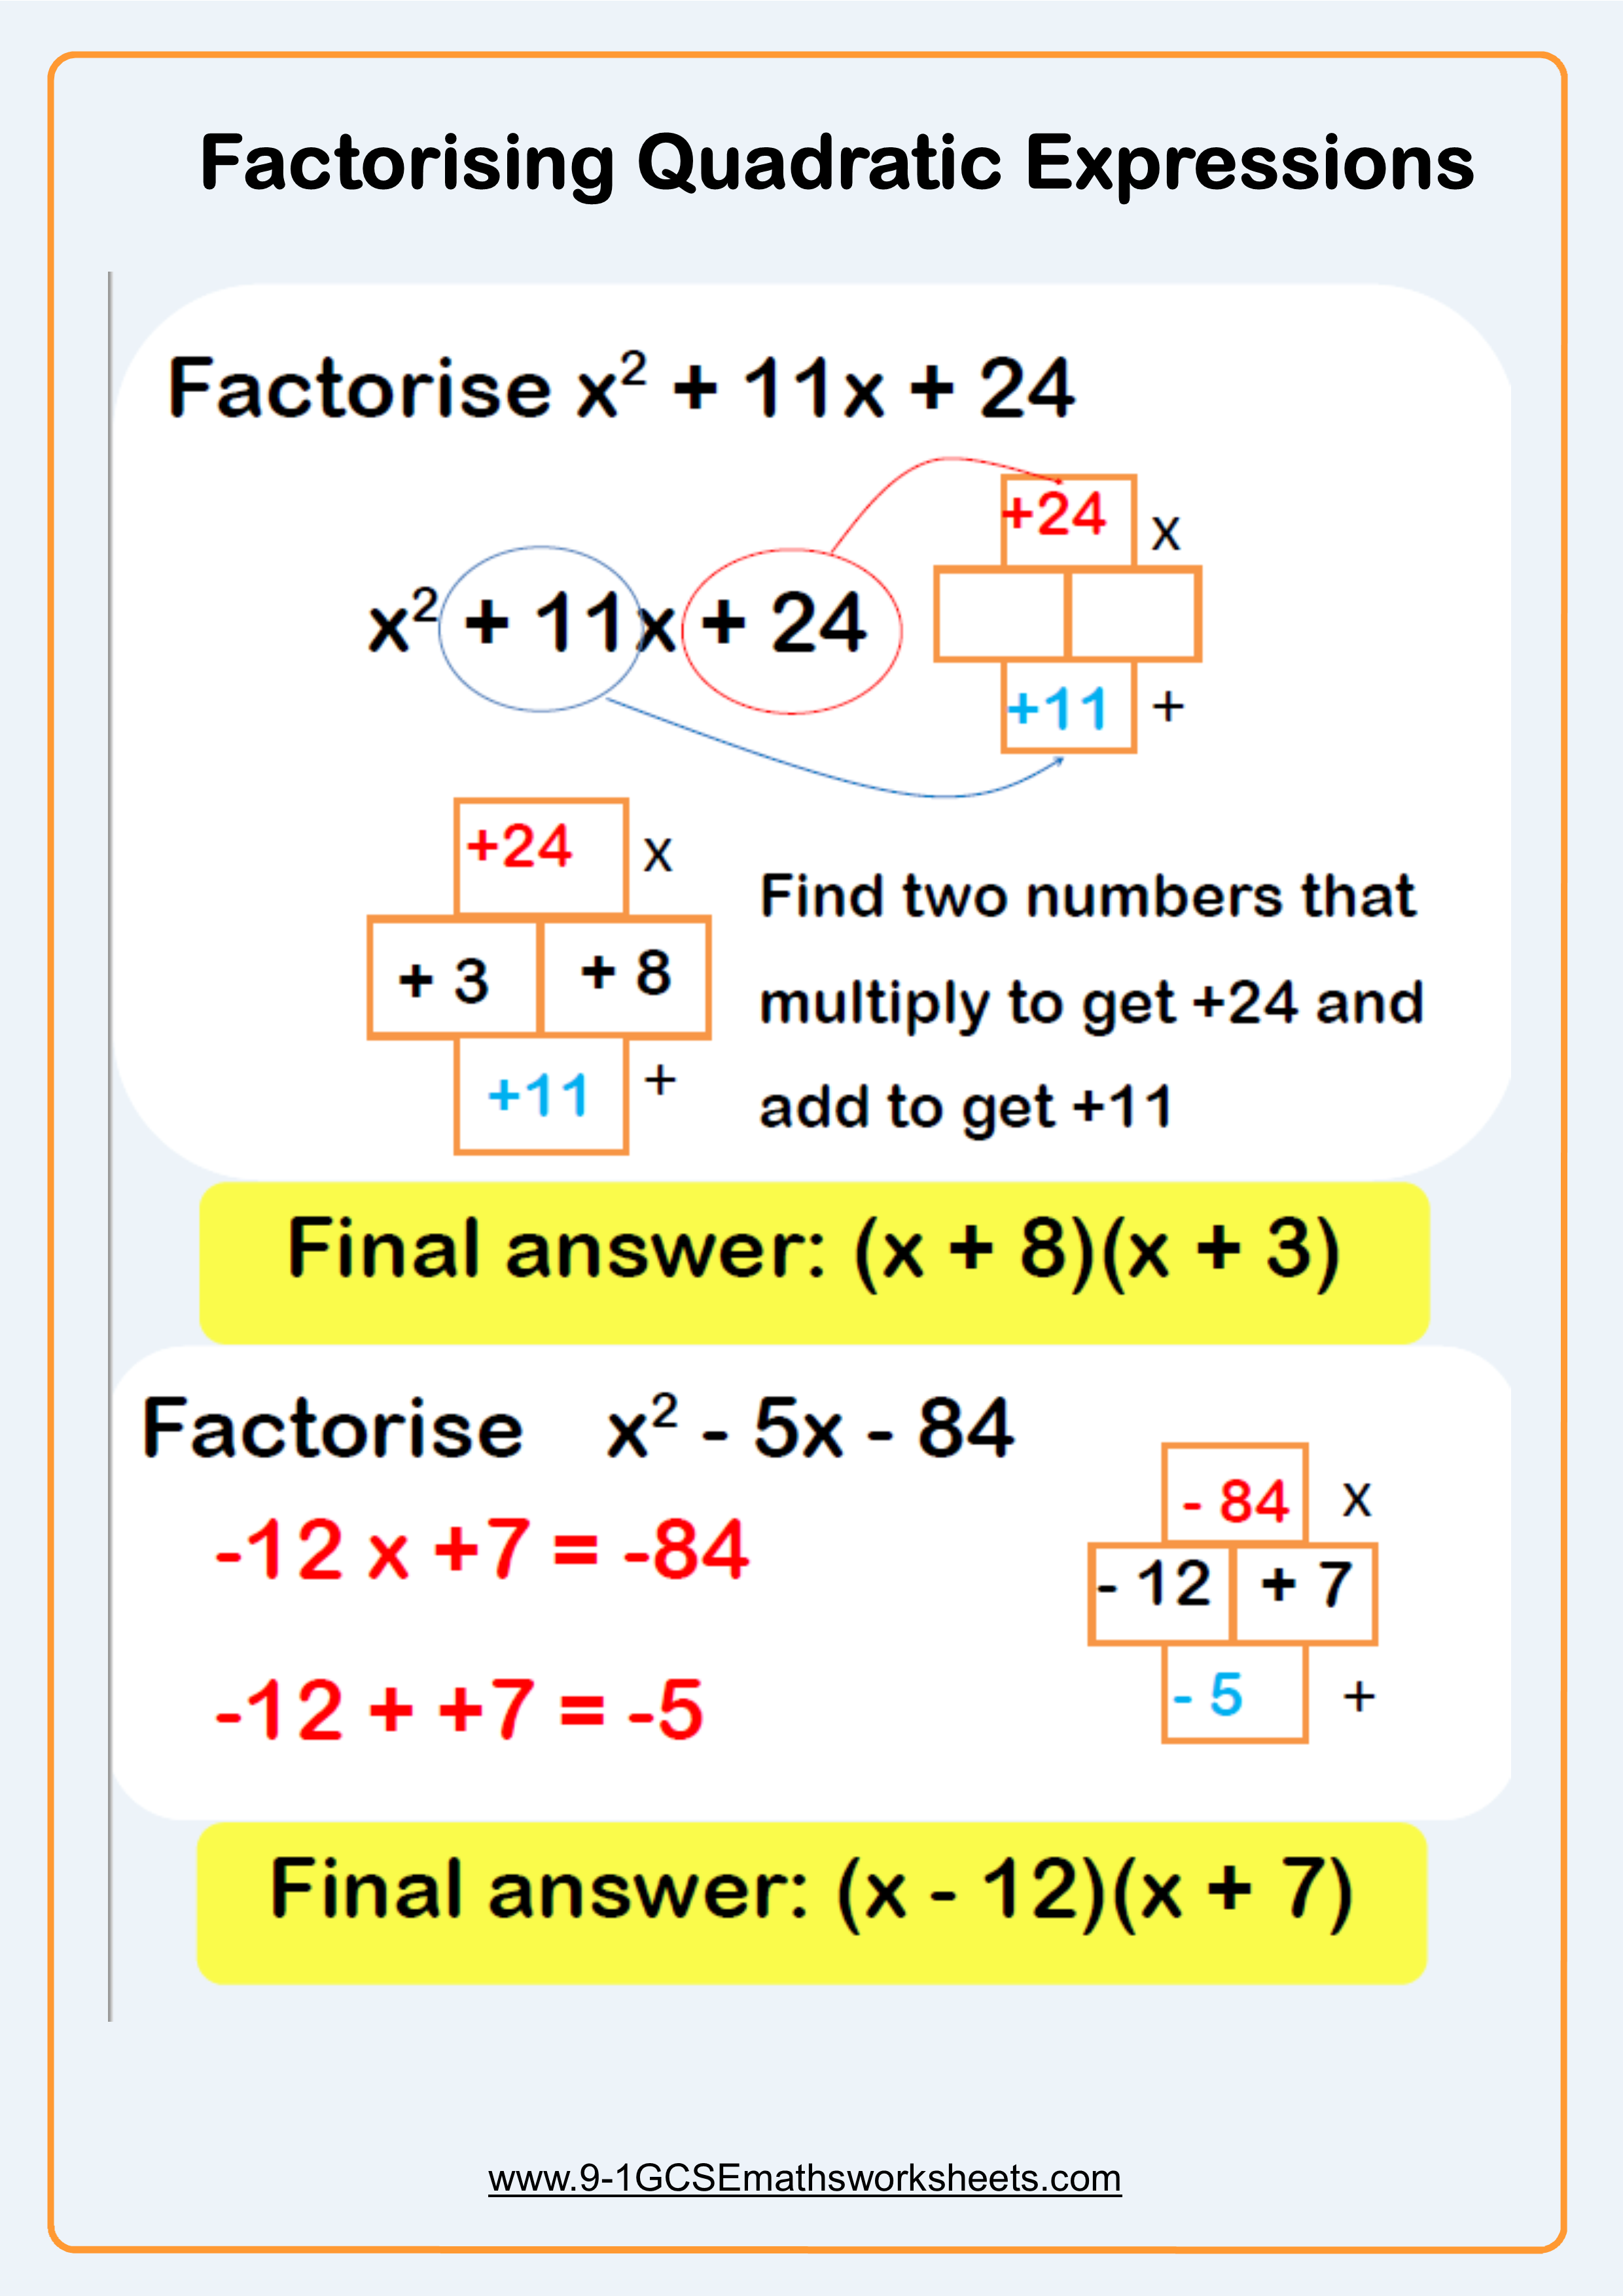 Factorising Quadratics Worksheets - New & Engaging  Cazoomy Within Factoring Quadratic Expressions Worksheet